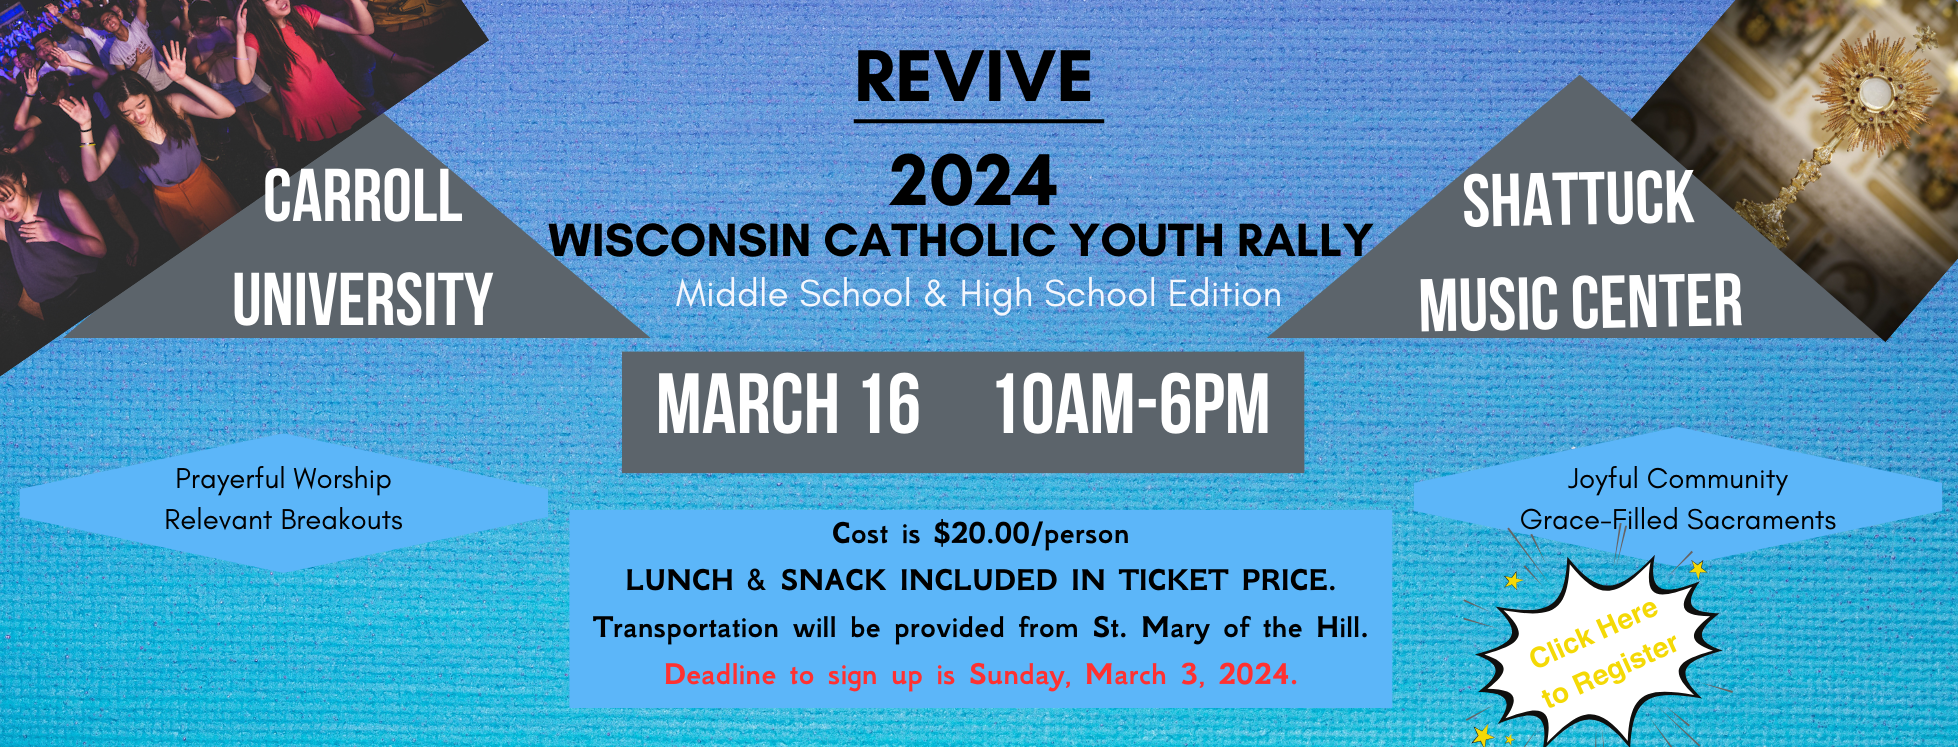 WI Catholic Youth Rally (1)